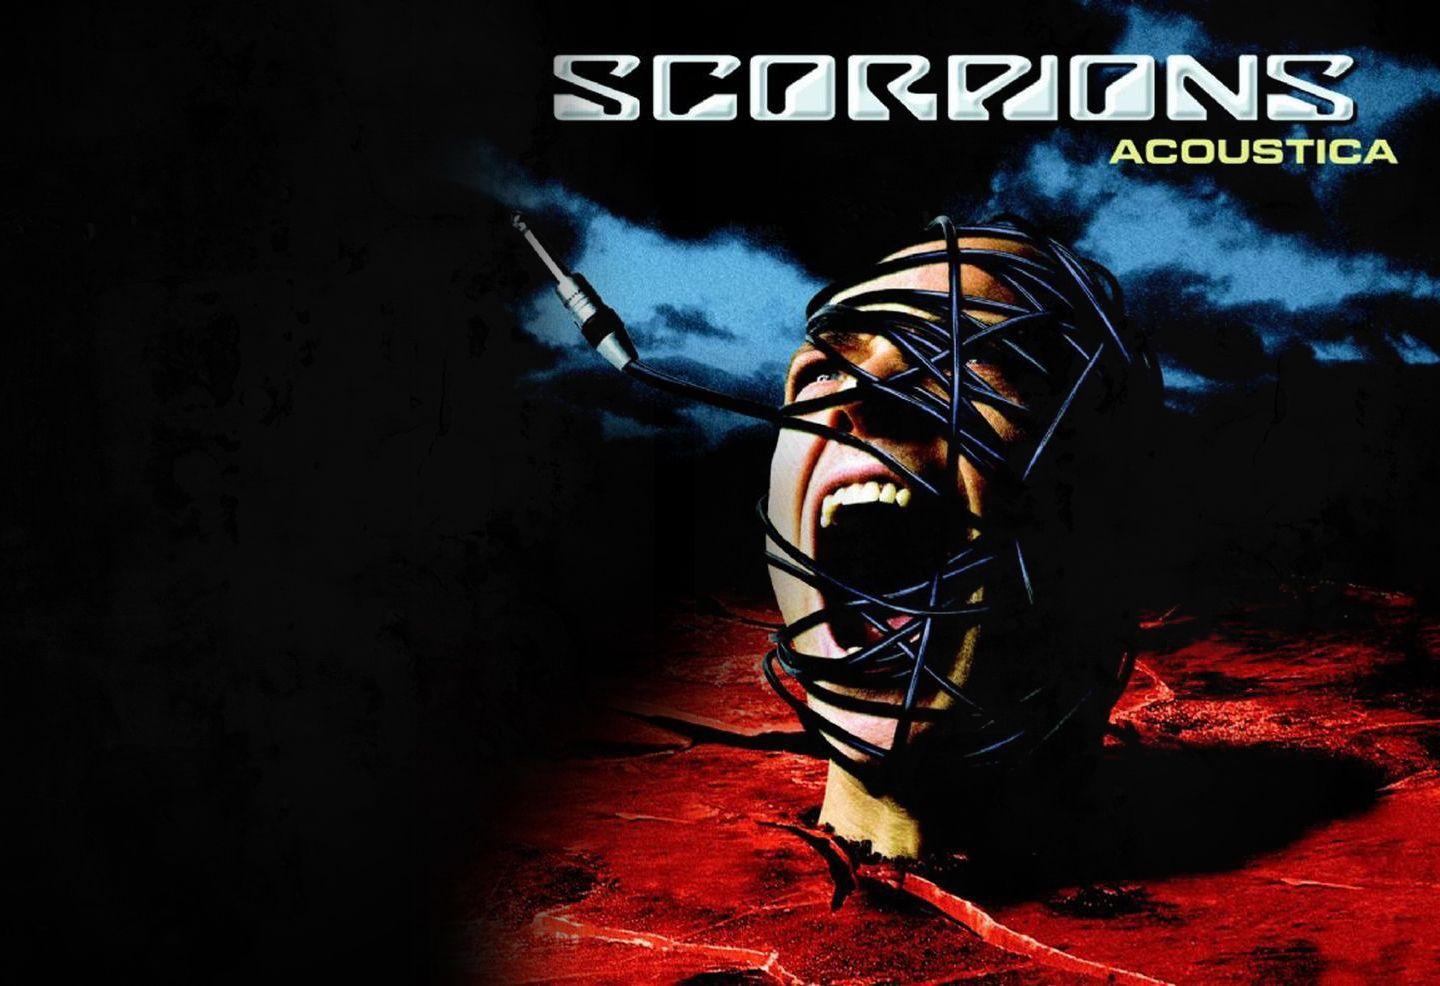 Scorpions album cover Wallpaper HD Free Download 2111. Scorpions